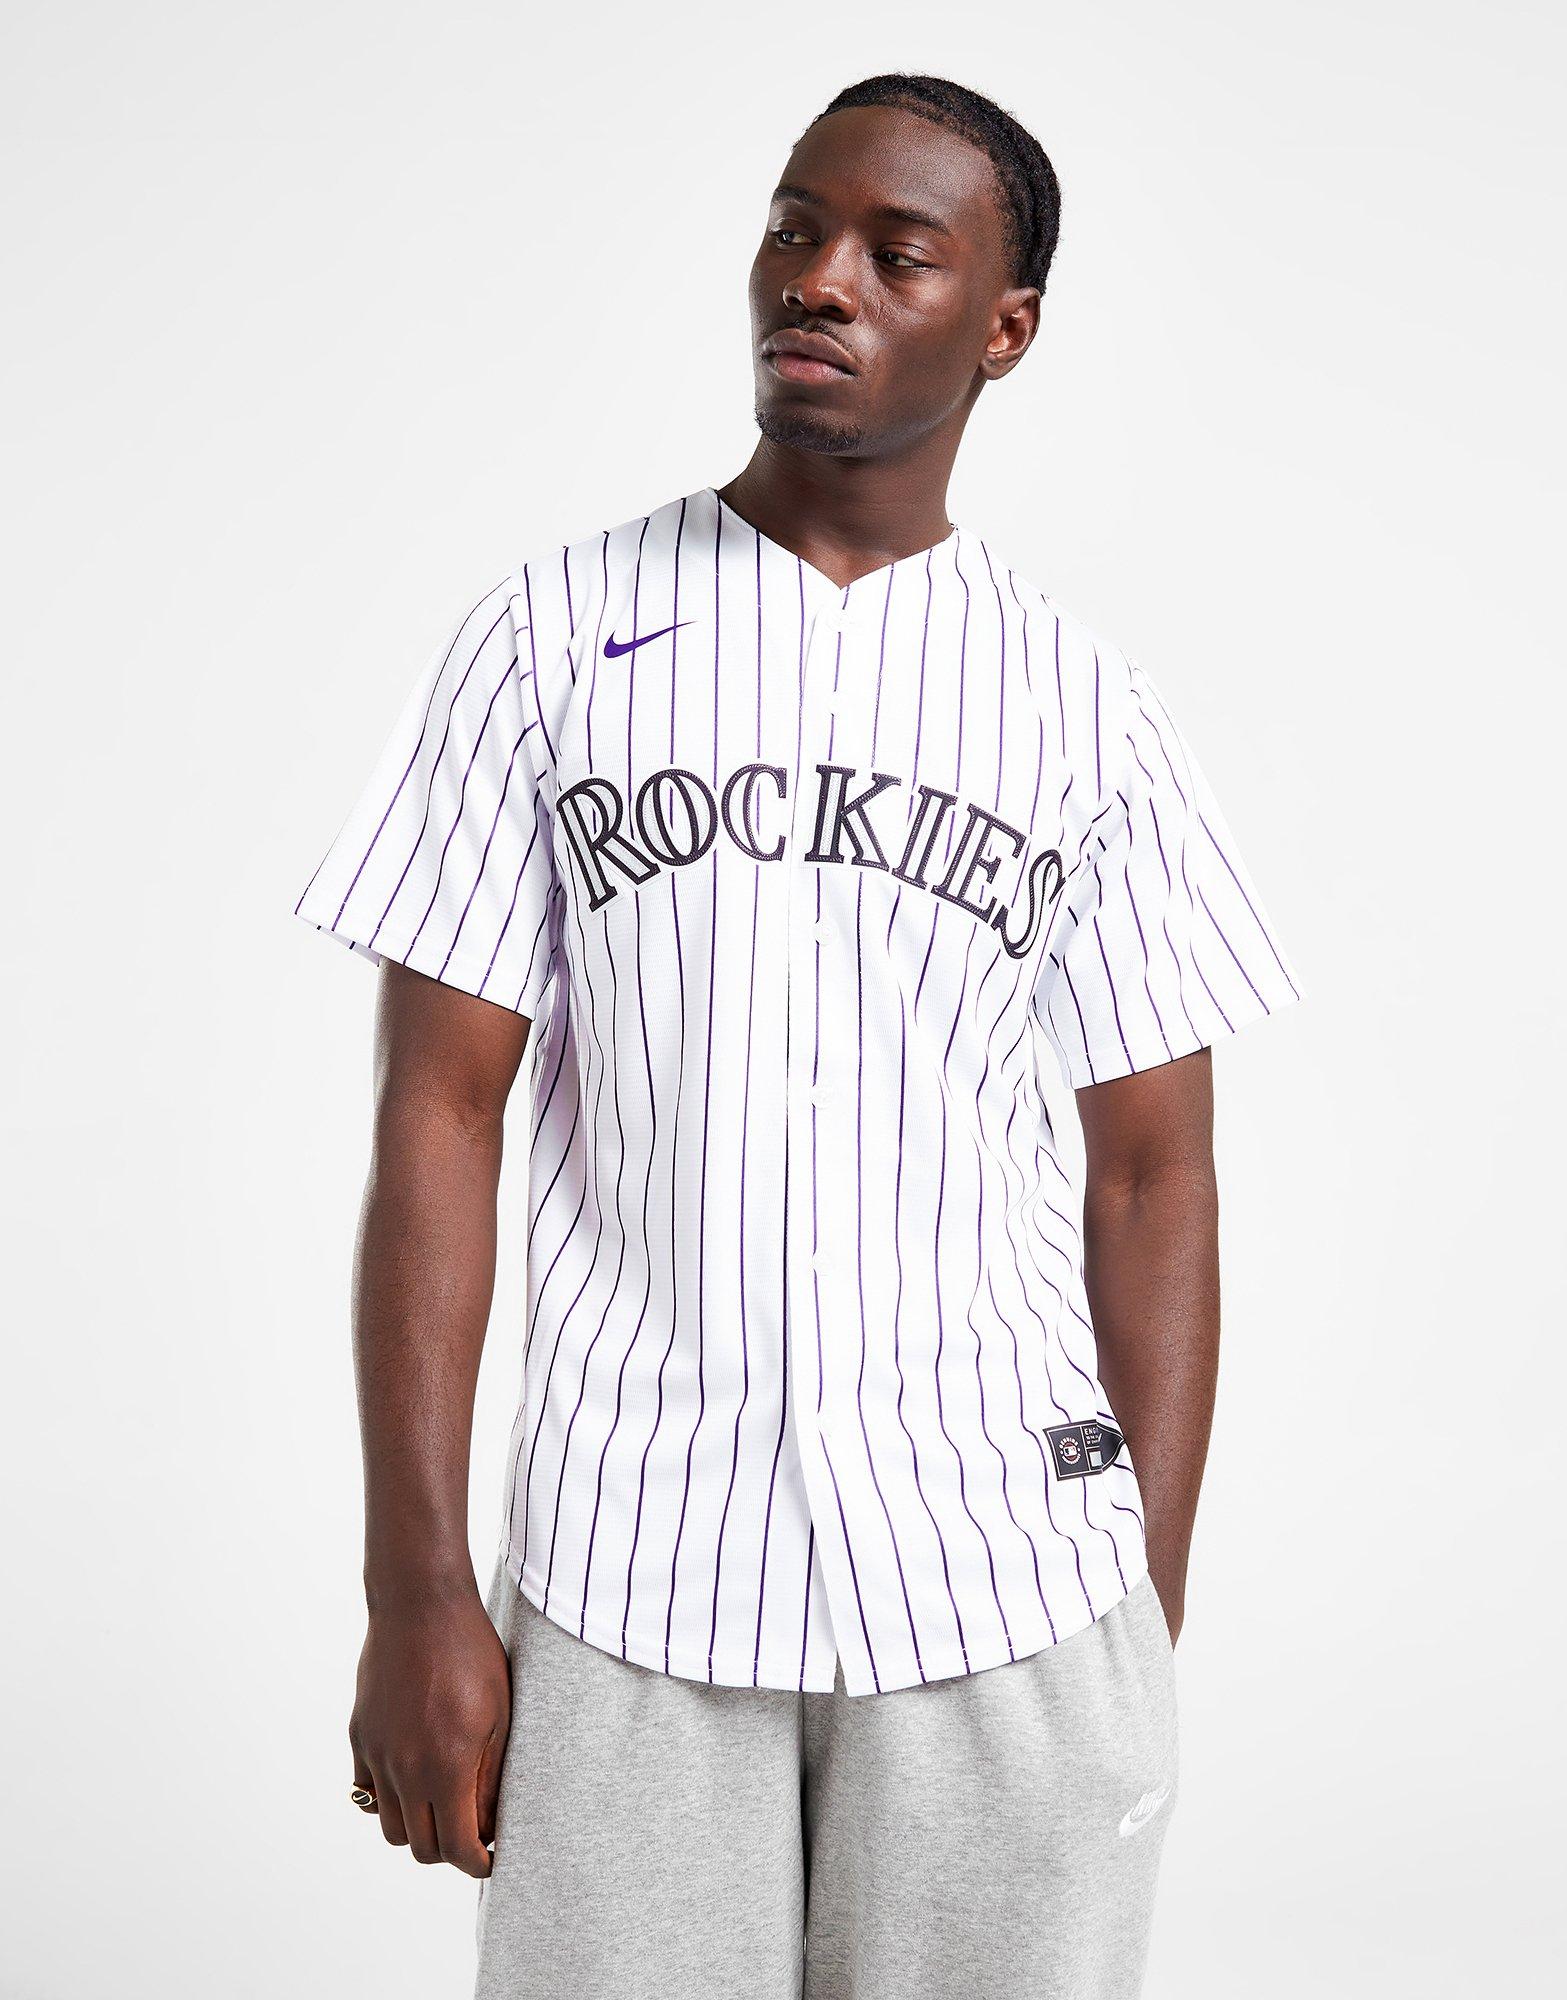 Nike MLB Colorado Rockies Men's Replica Baseball Jersey - Purple XL